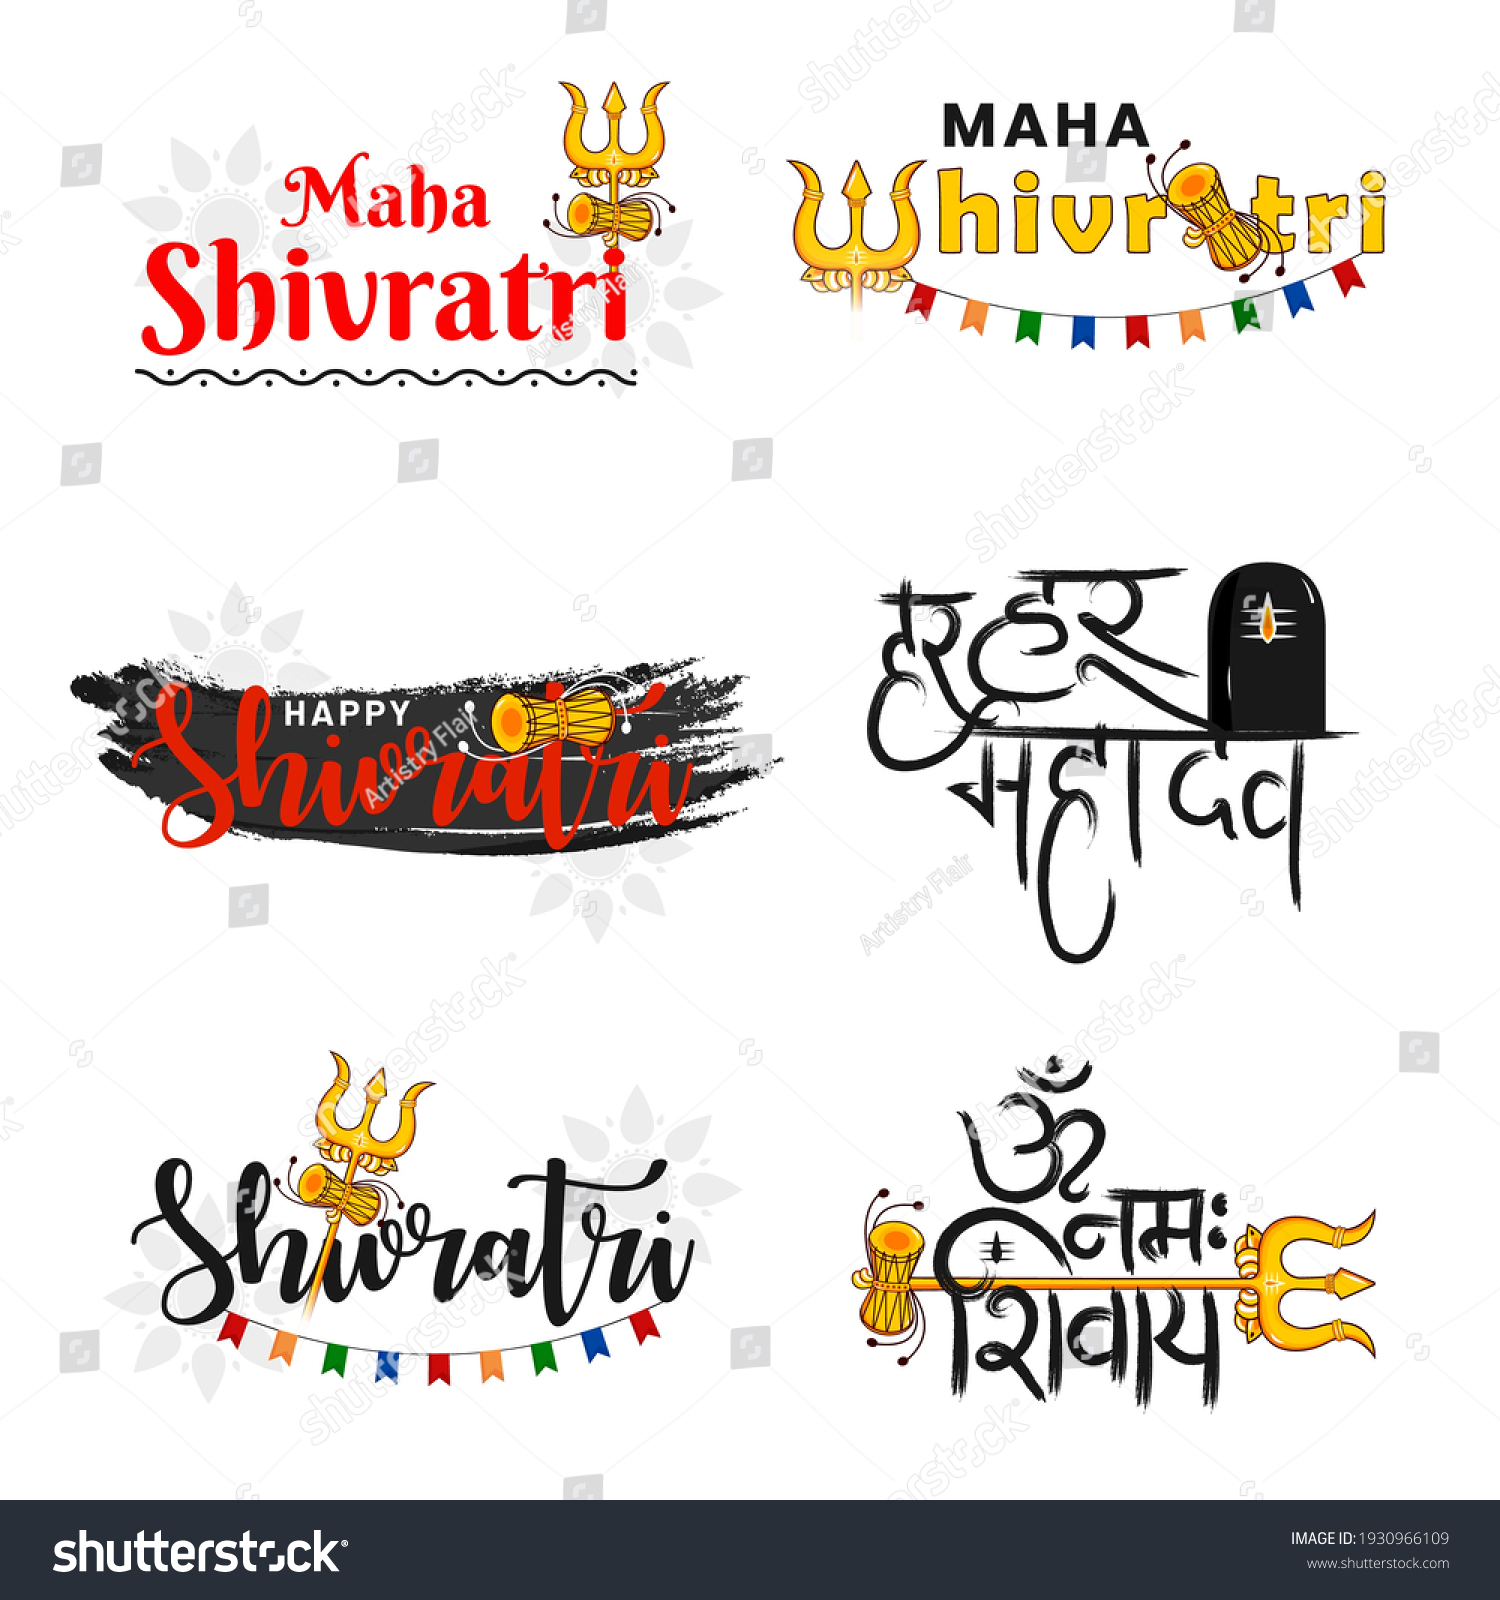 SVG of Illustration of Mahashivratri typography set, elements,decoration with hindi text. Translation in english I bow to shiva. svg